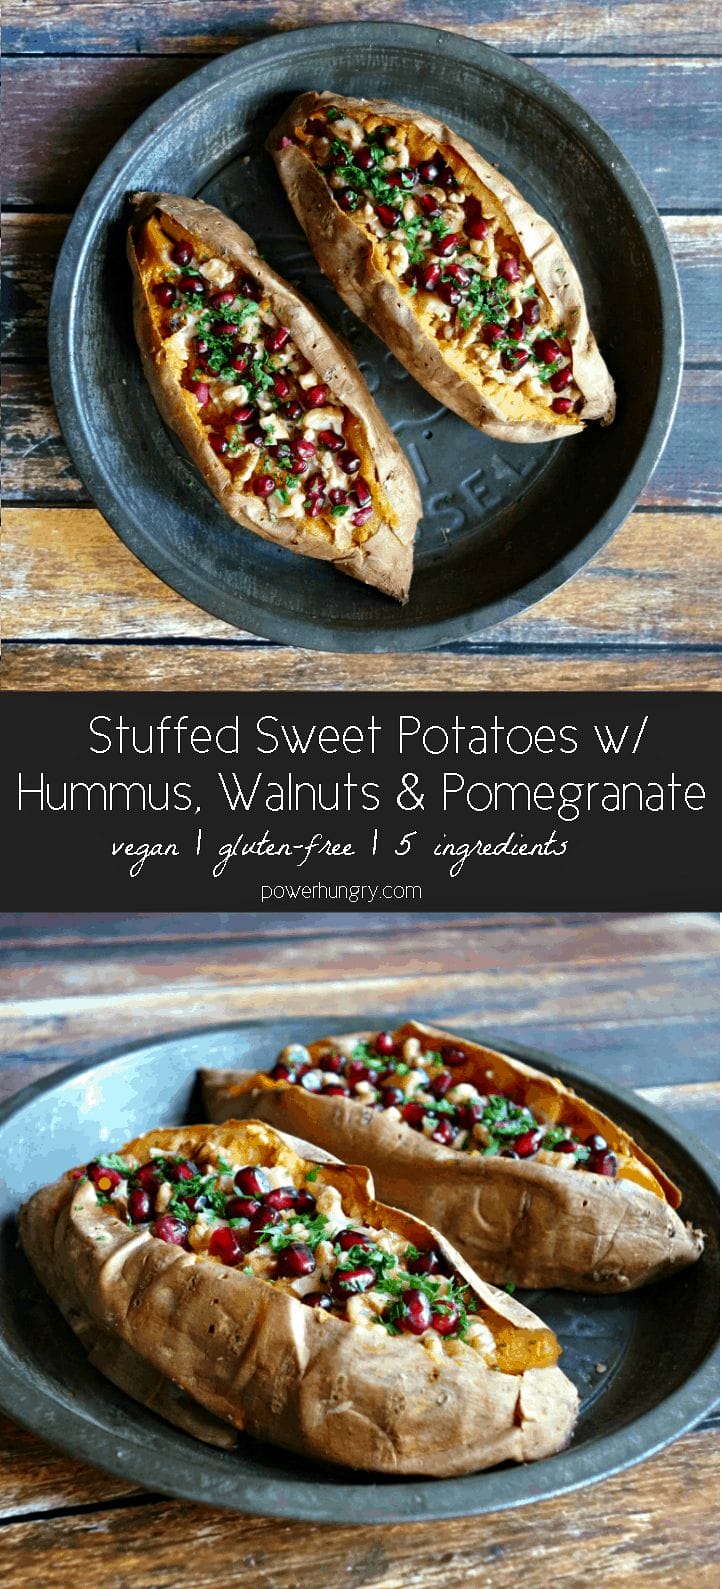 vegan supper stuffed sweet potatoes with hummus, walnuts and pomegranate